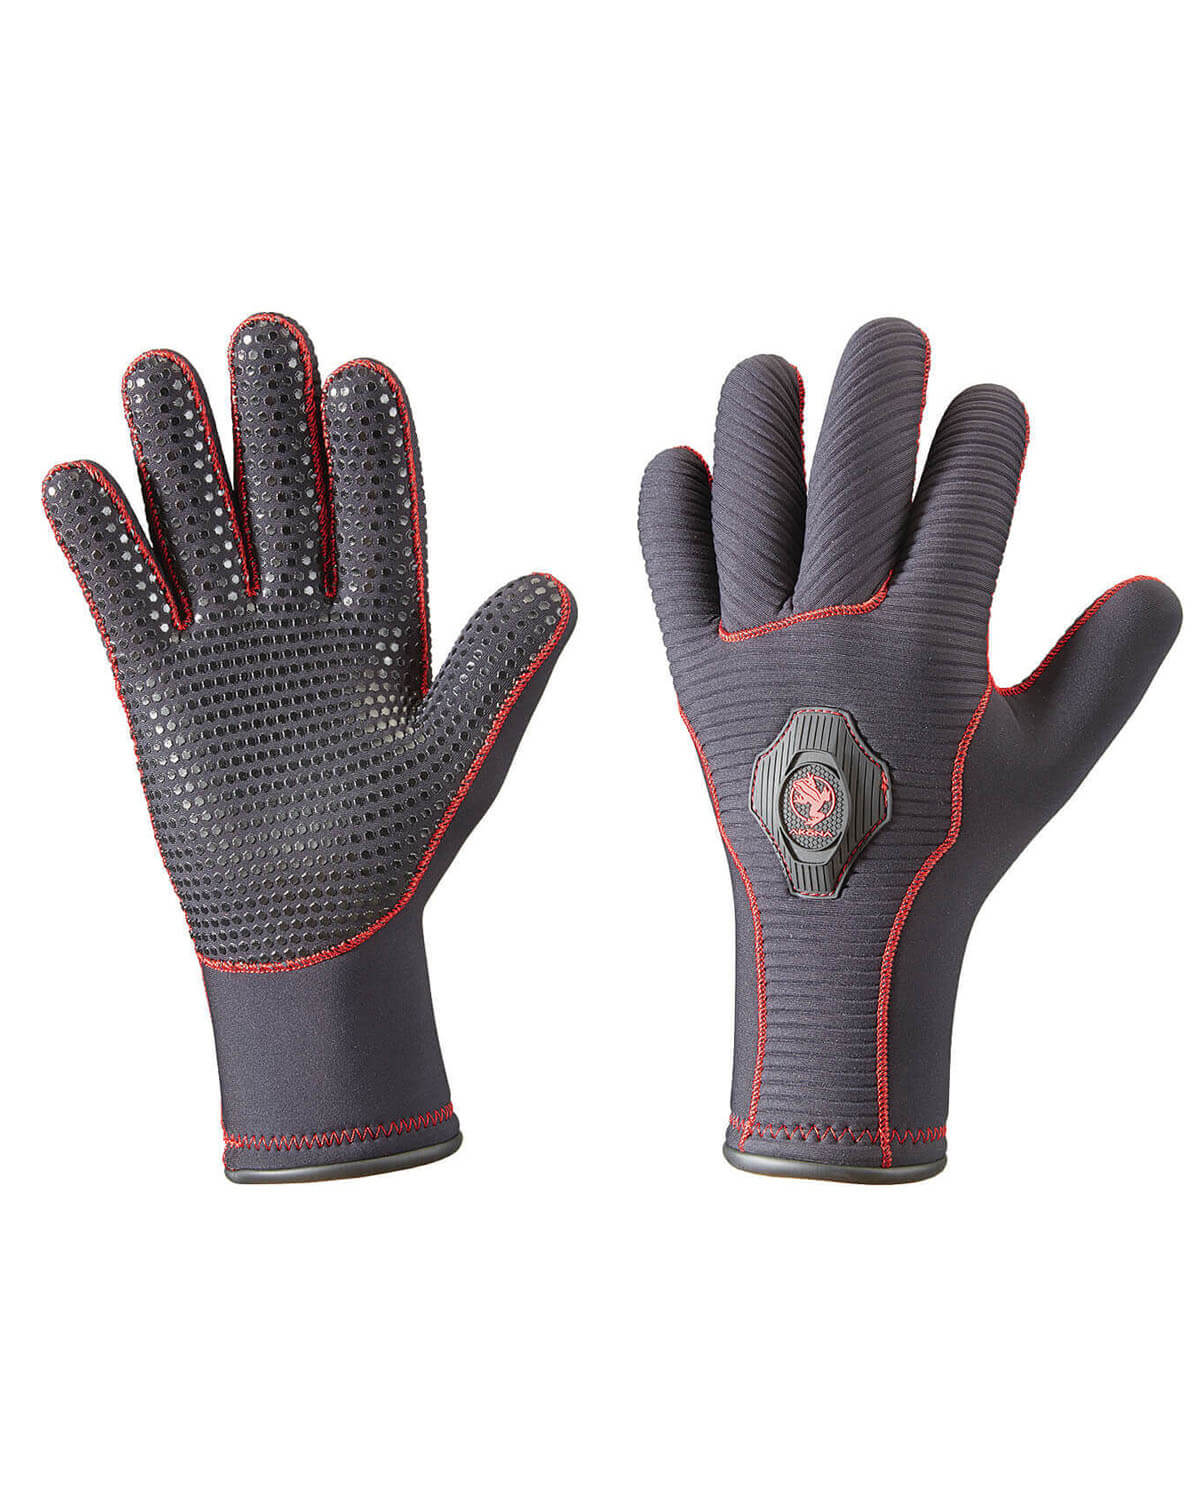 3.5mm AKONA Standard Wetsuit Gloves